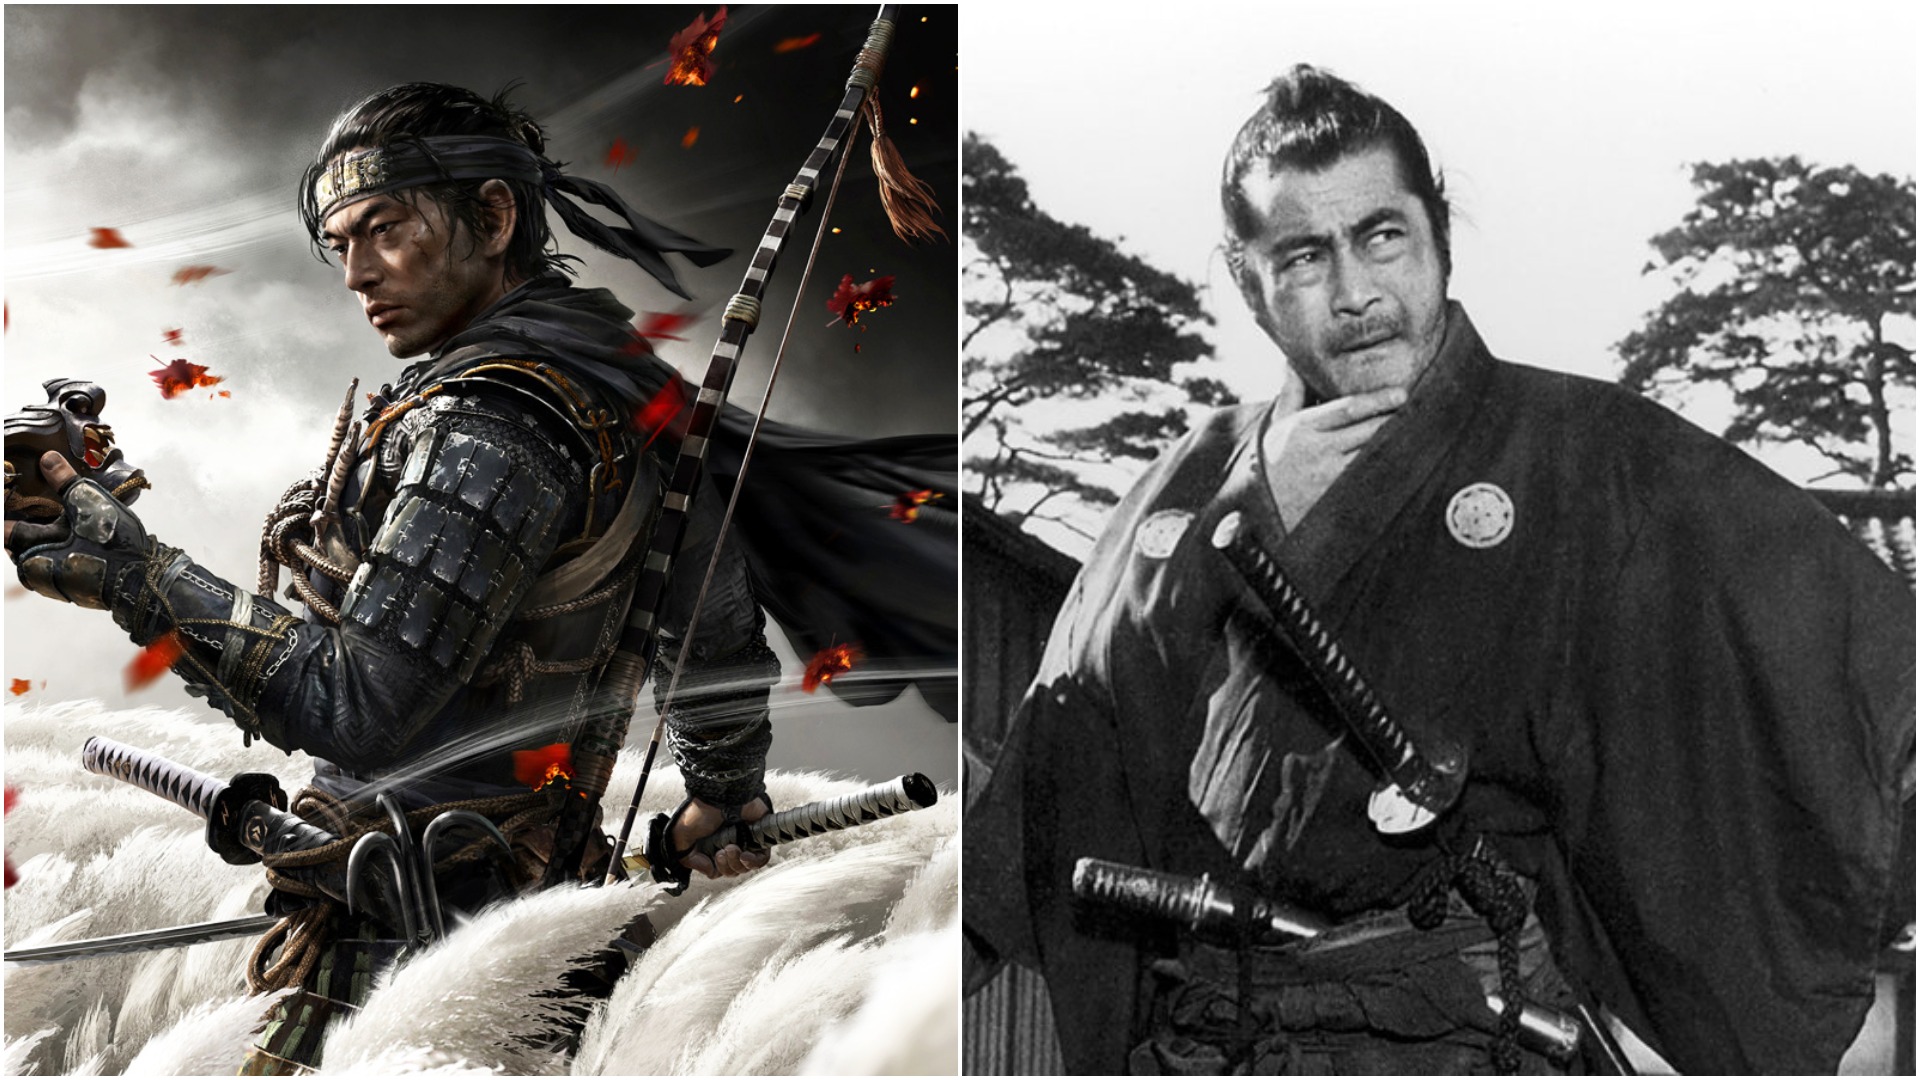 Ghost Of Tsushima Essential Kurosawa Samurai Movies To Watch Before The Game Den Of Geek